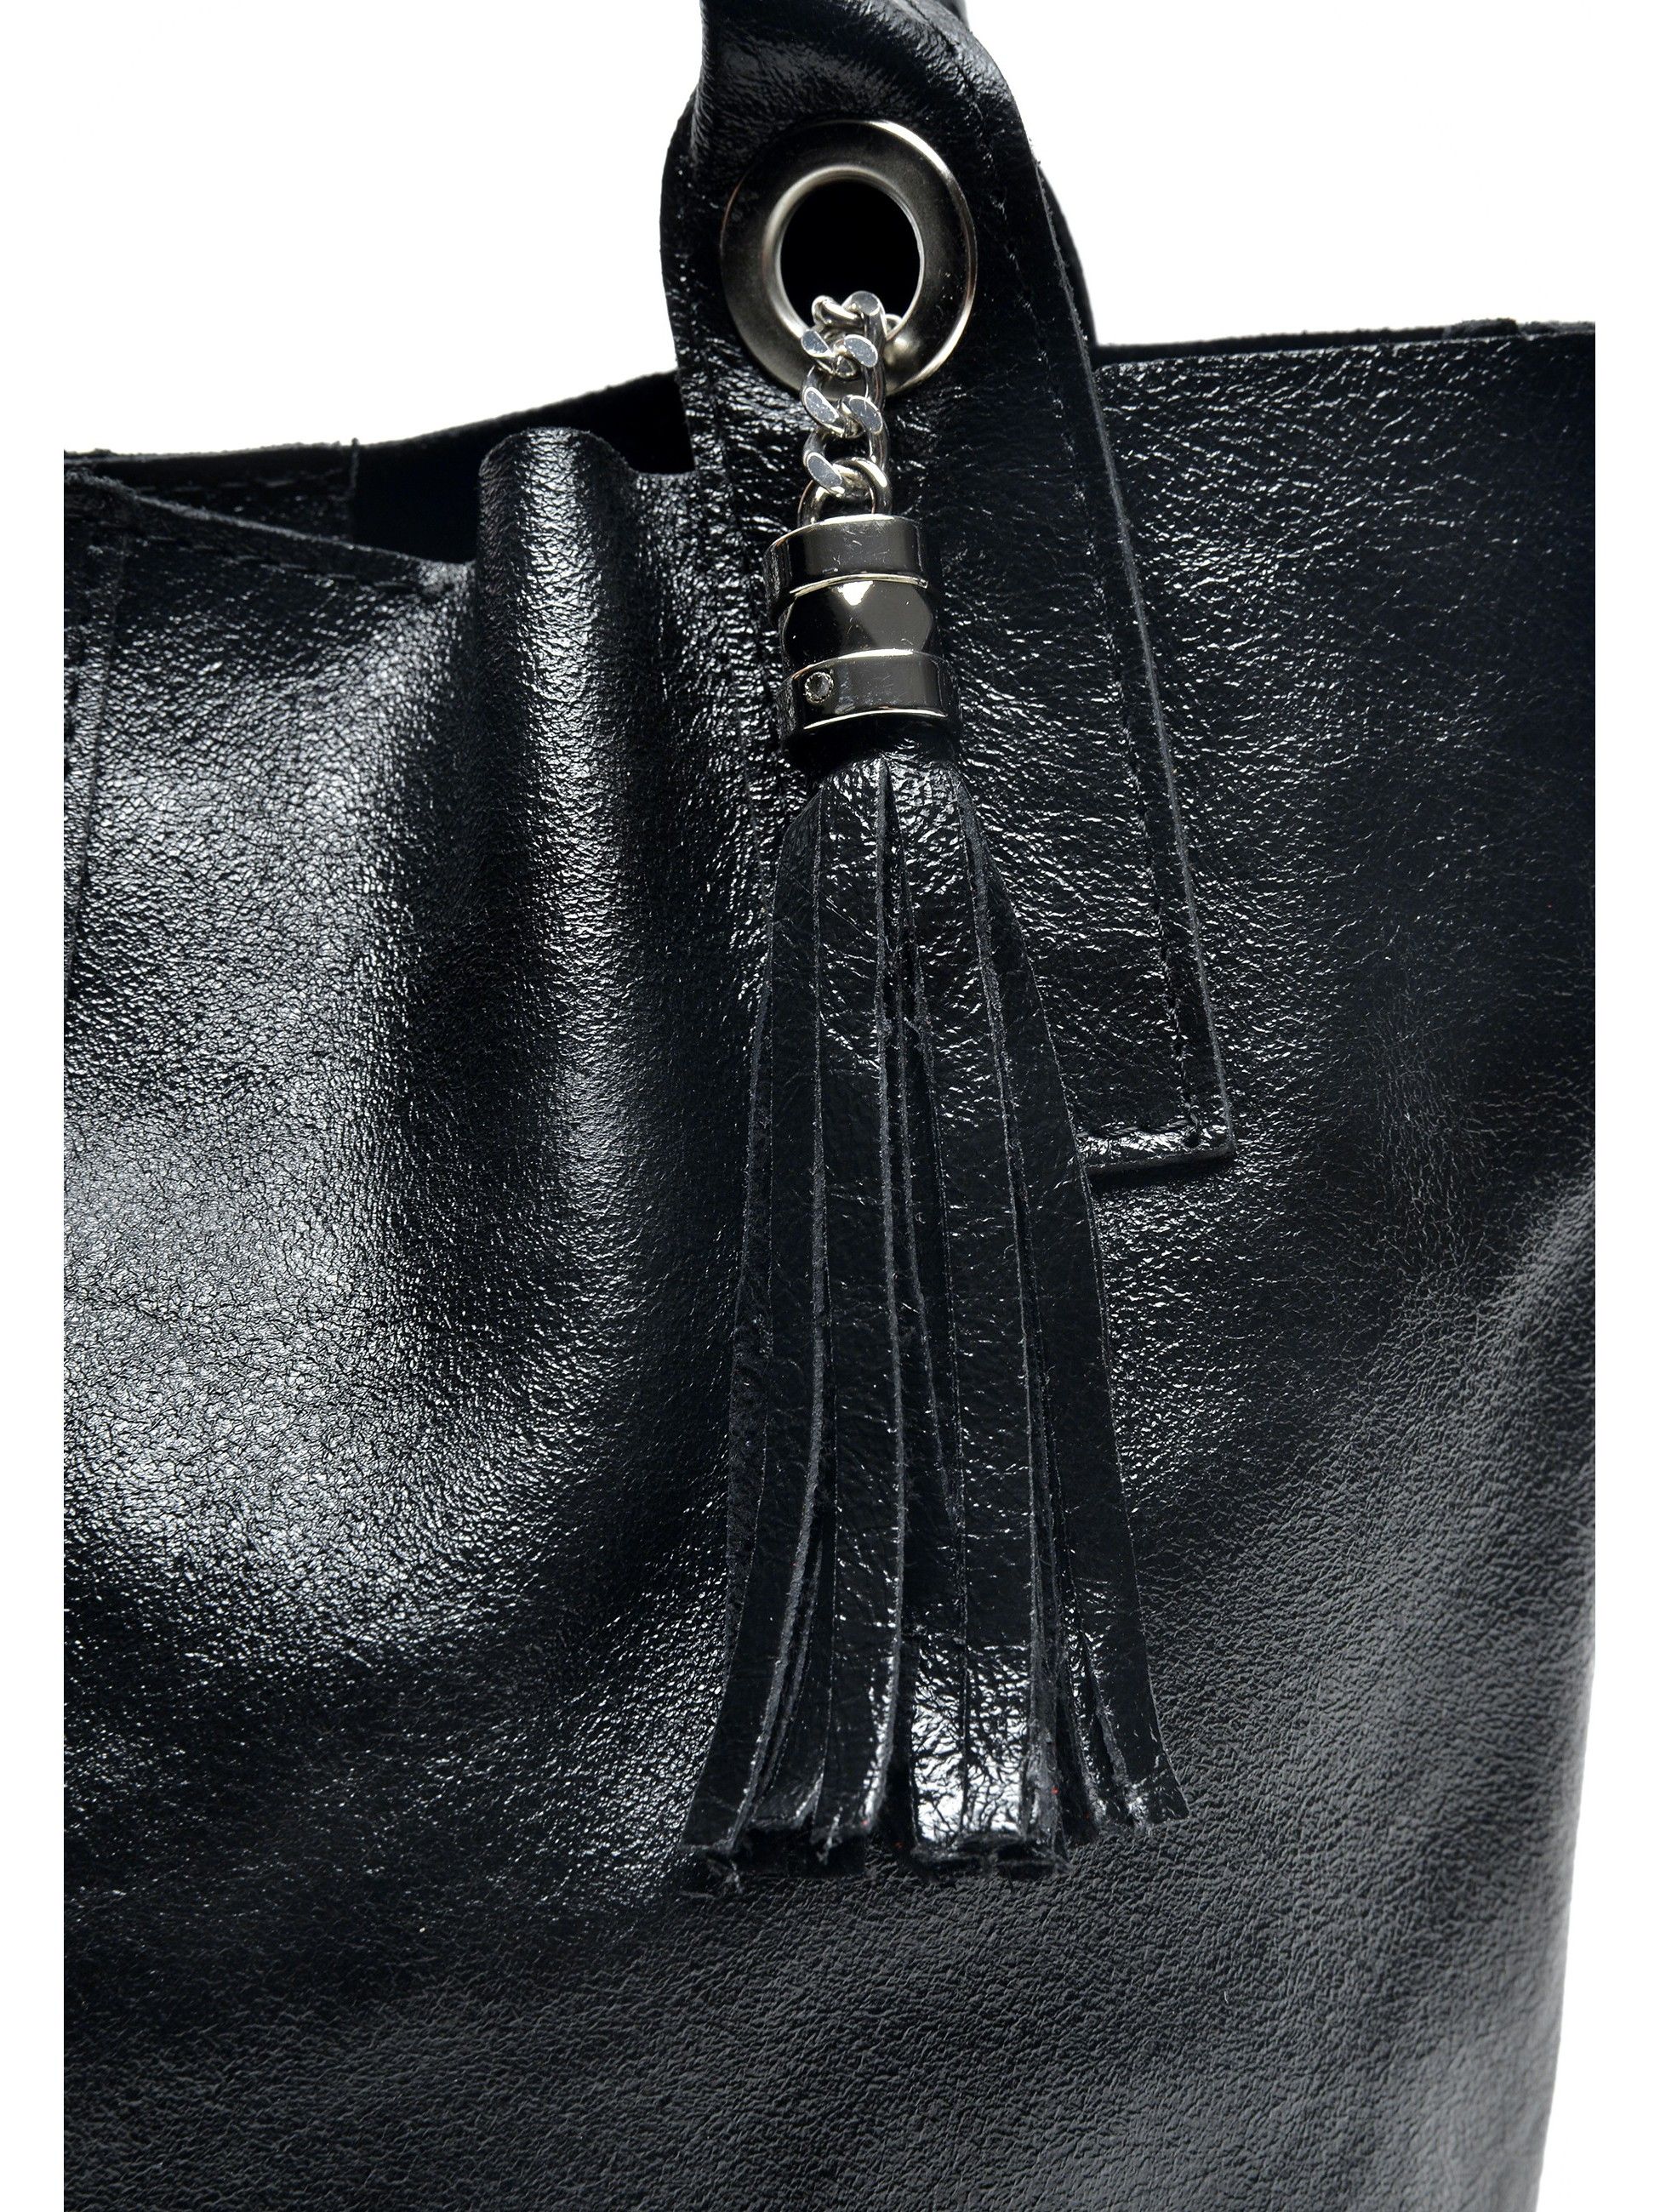 Tote Bag
100% cow leather
Magnetic clasp
Inner purse
Tassel detail 
Dimensions (L): 34x40x17 cm
Handle: 54 cm
Shoulder strap: /